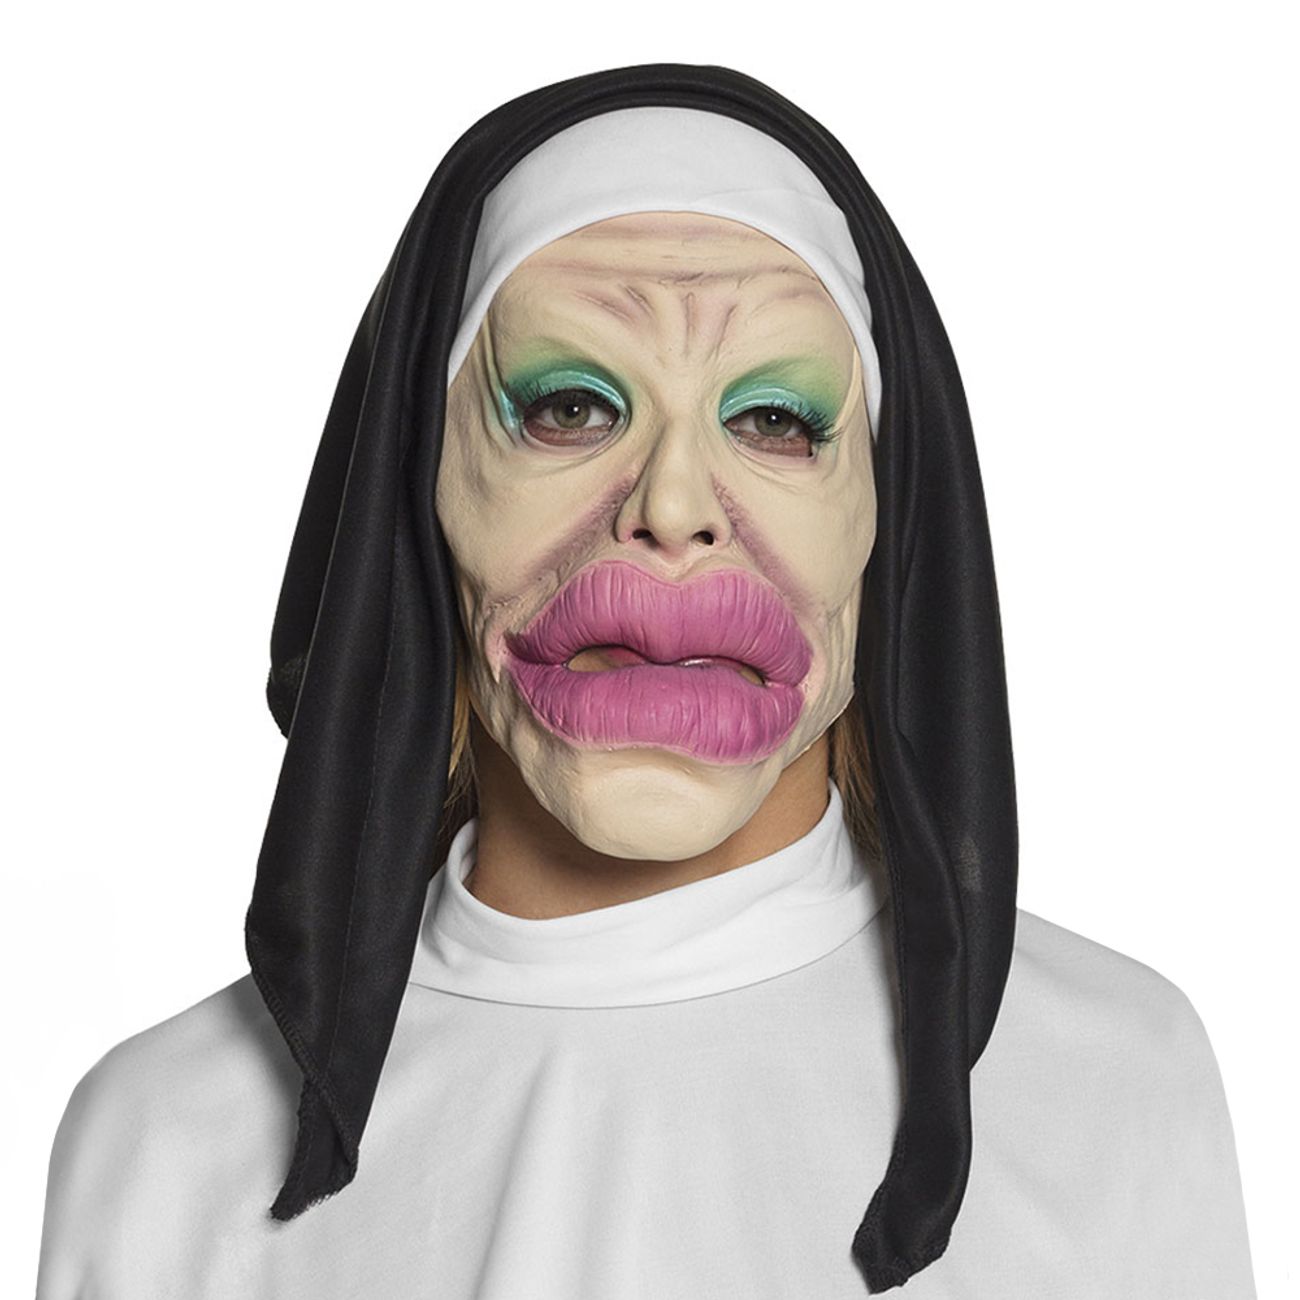 nunna-mask-heliga-lappar-43595-2